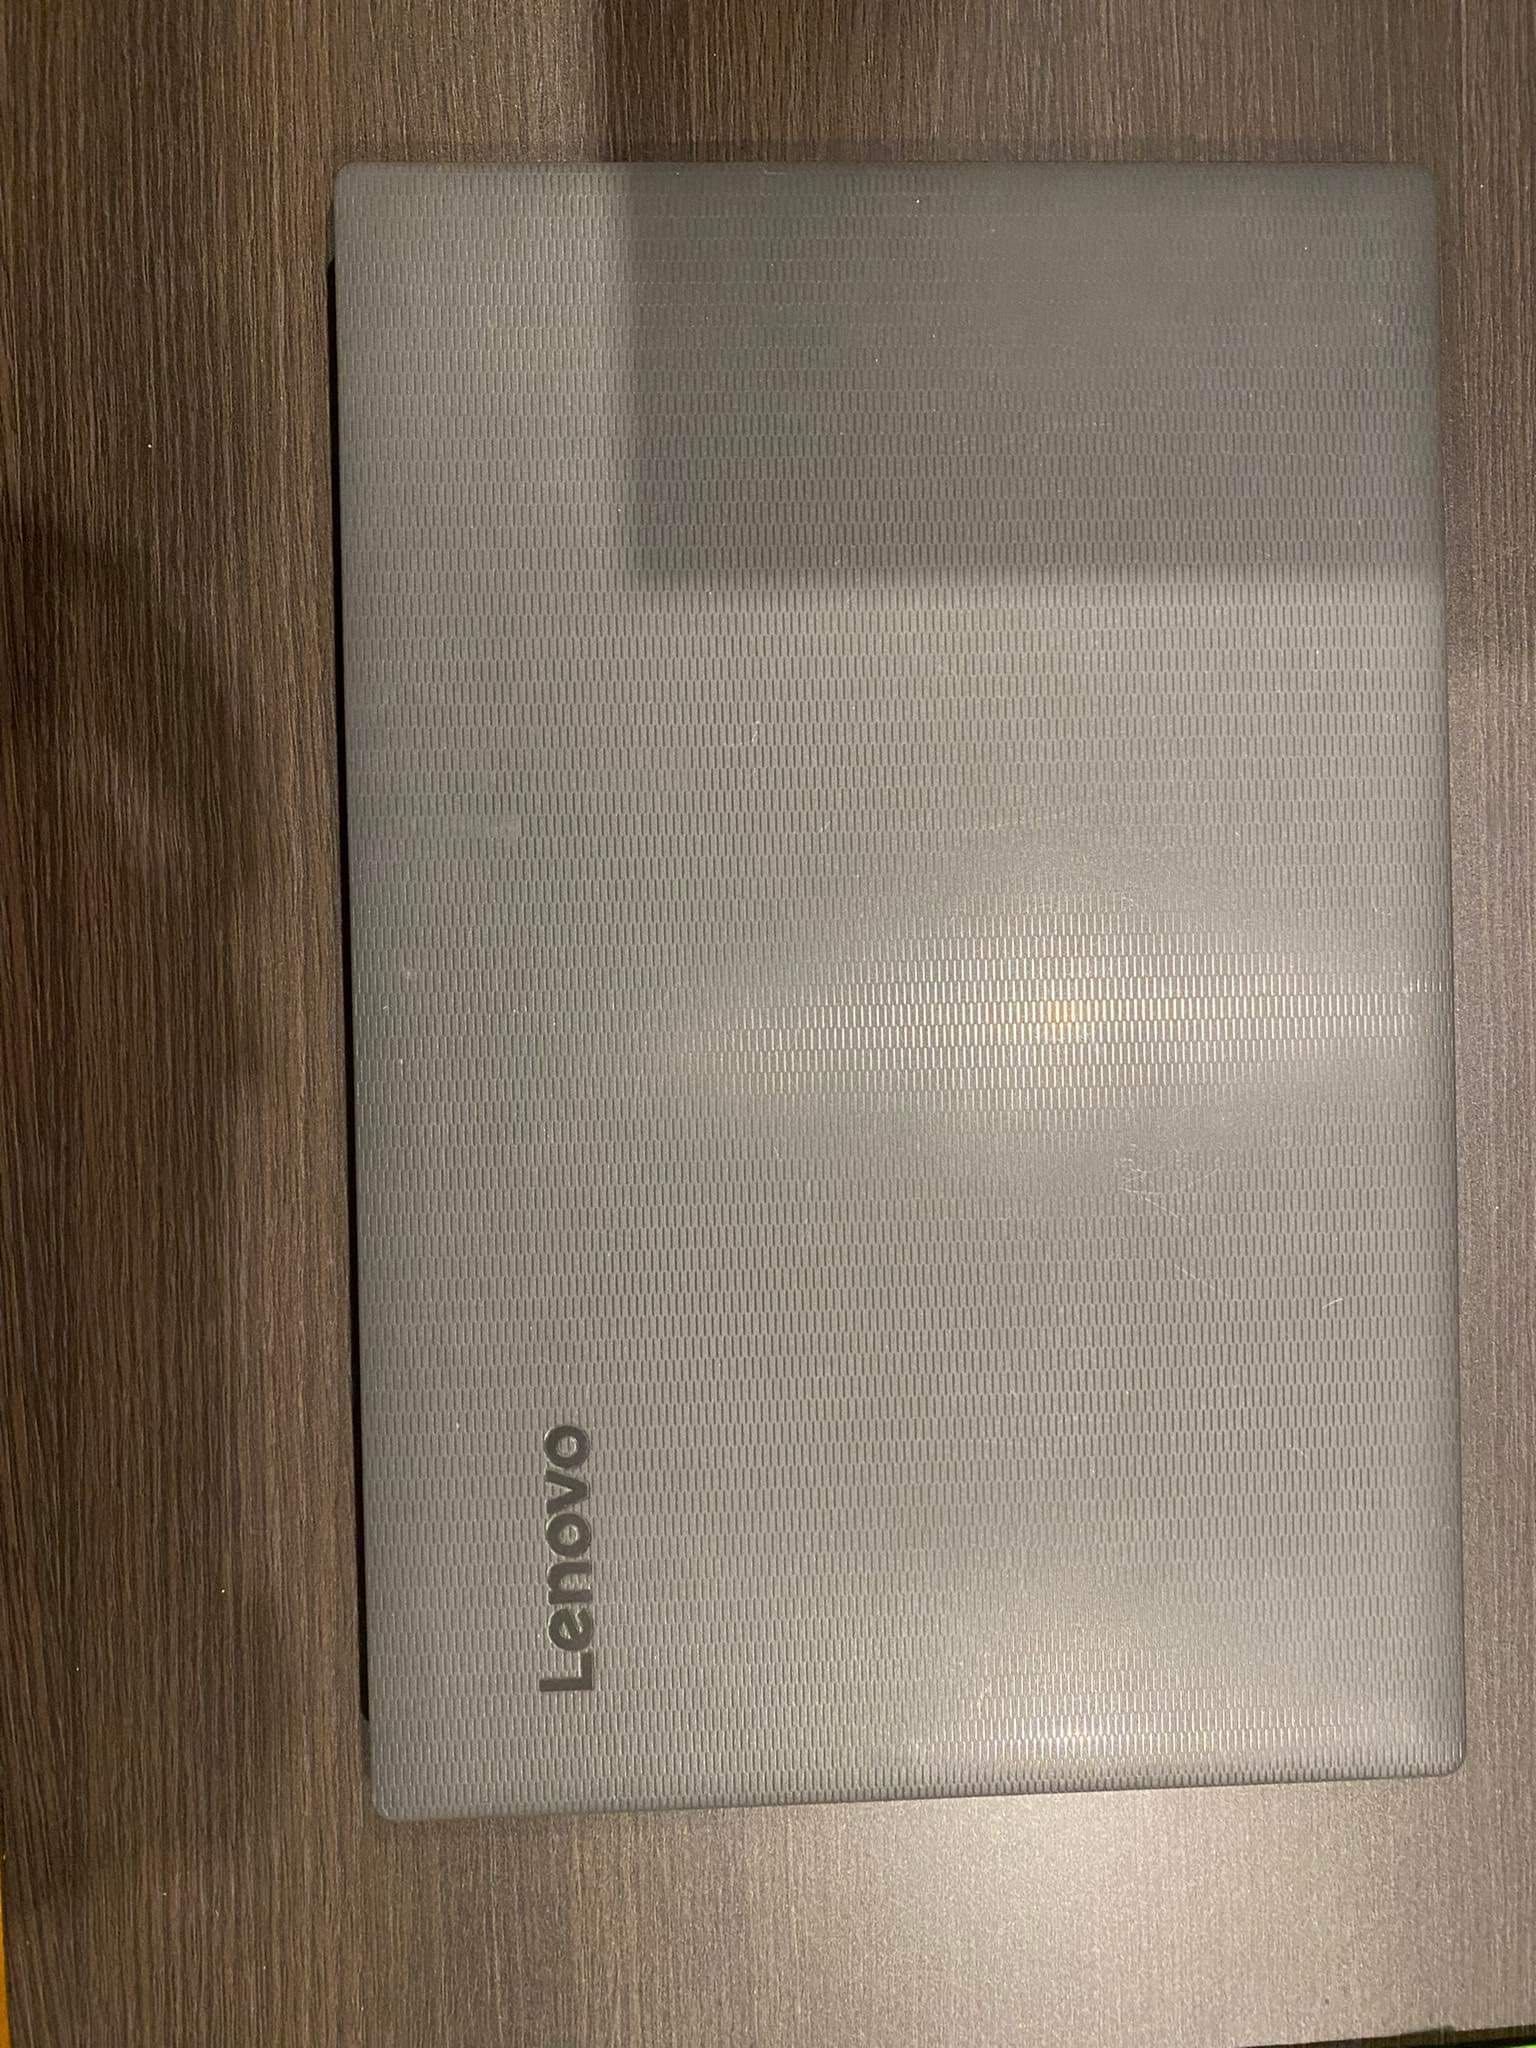 Laptop Lenovo V130-15IGM